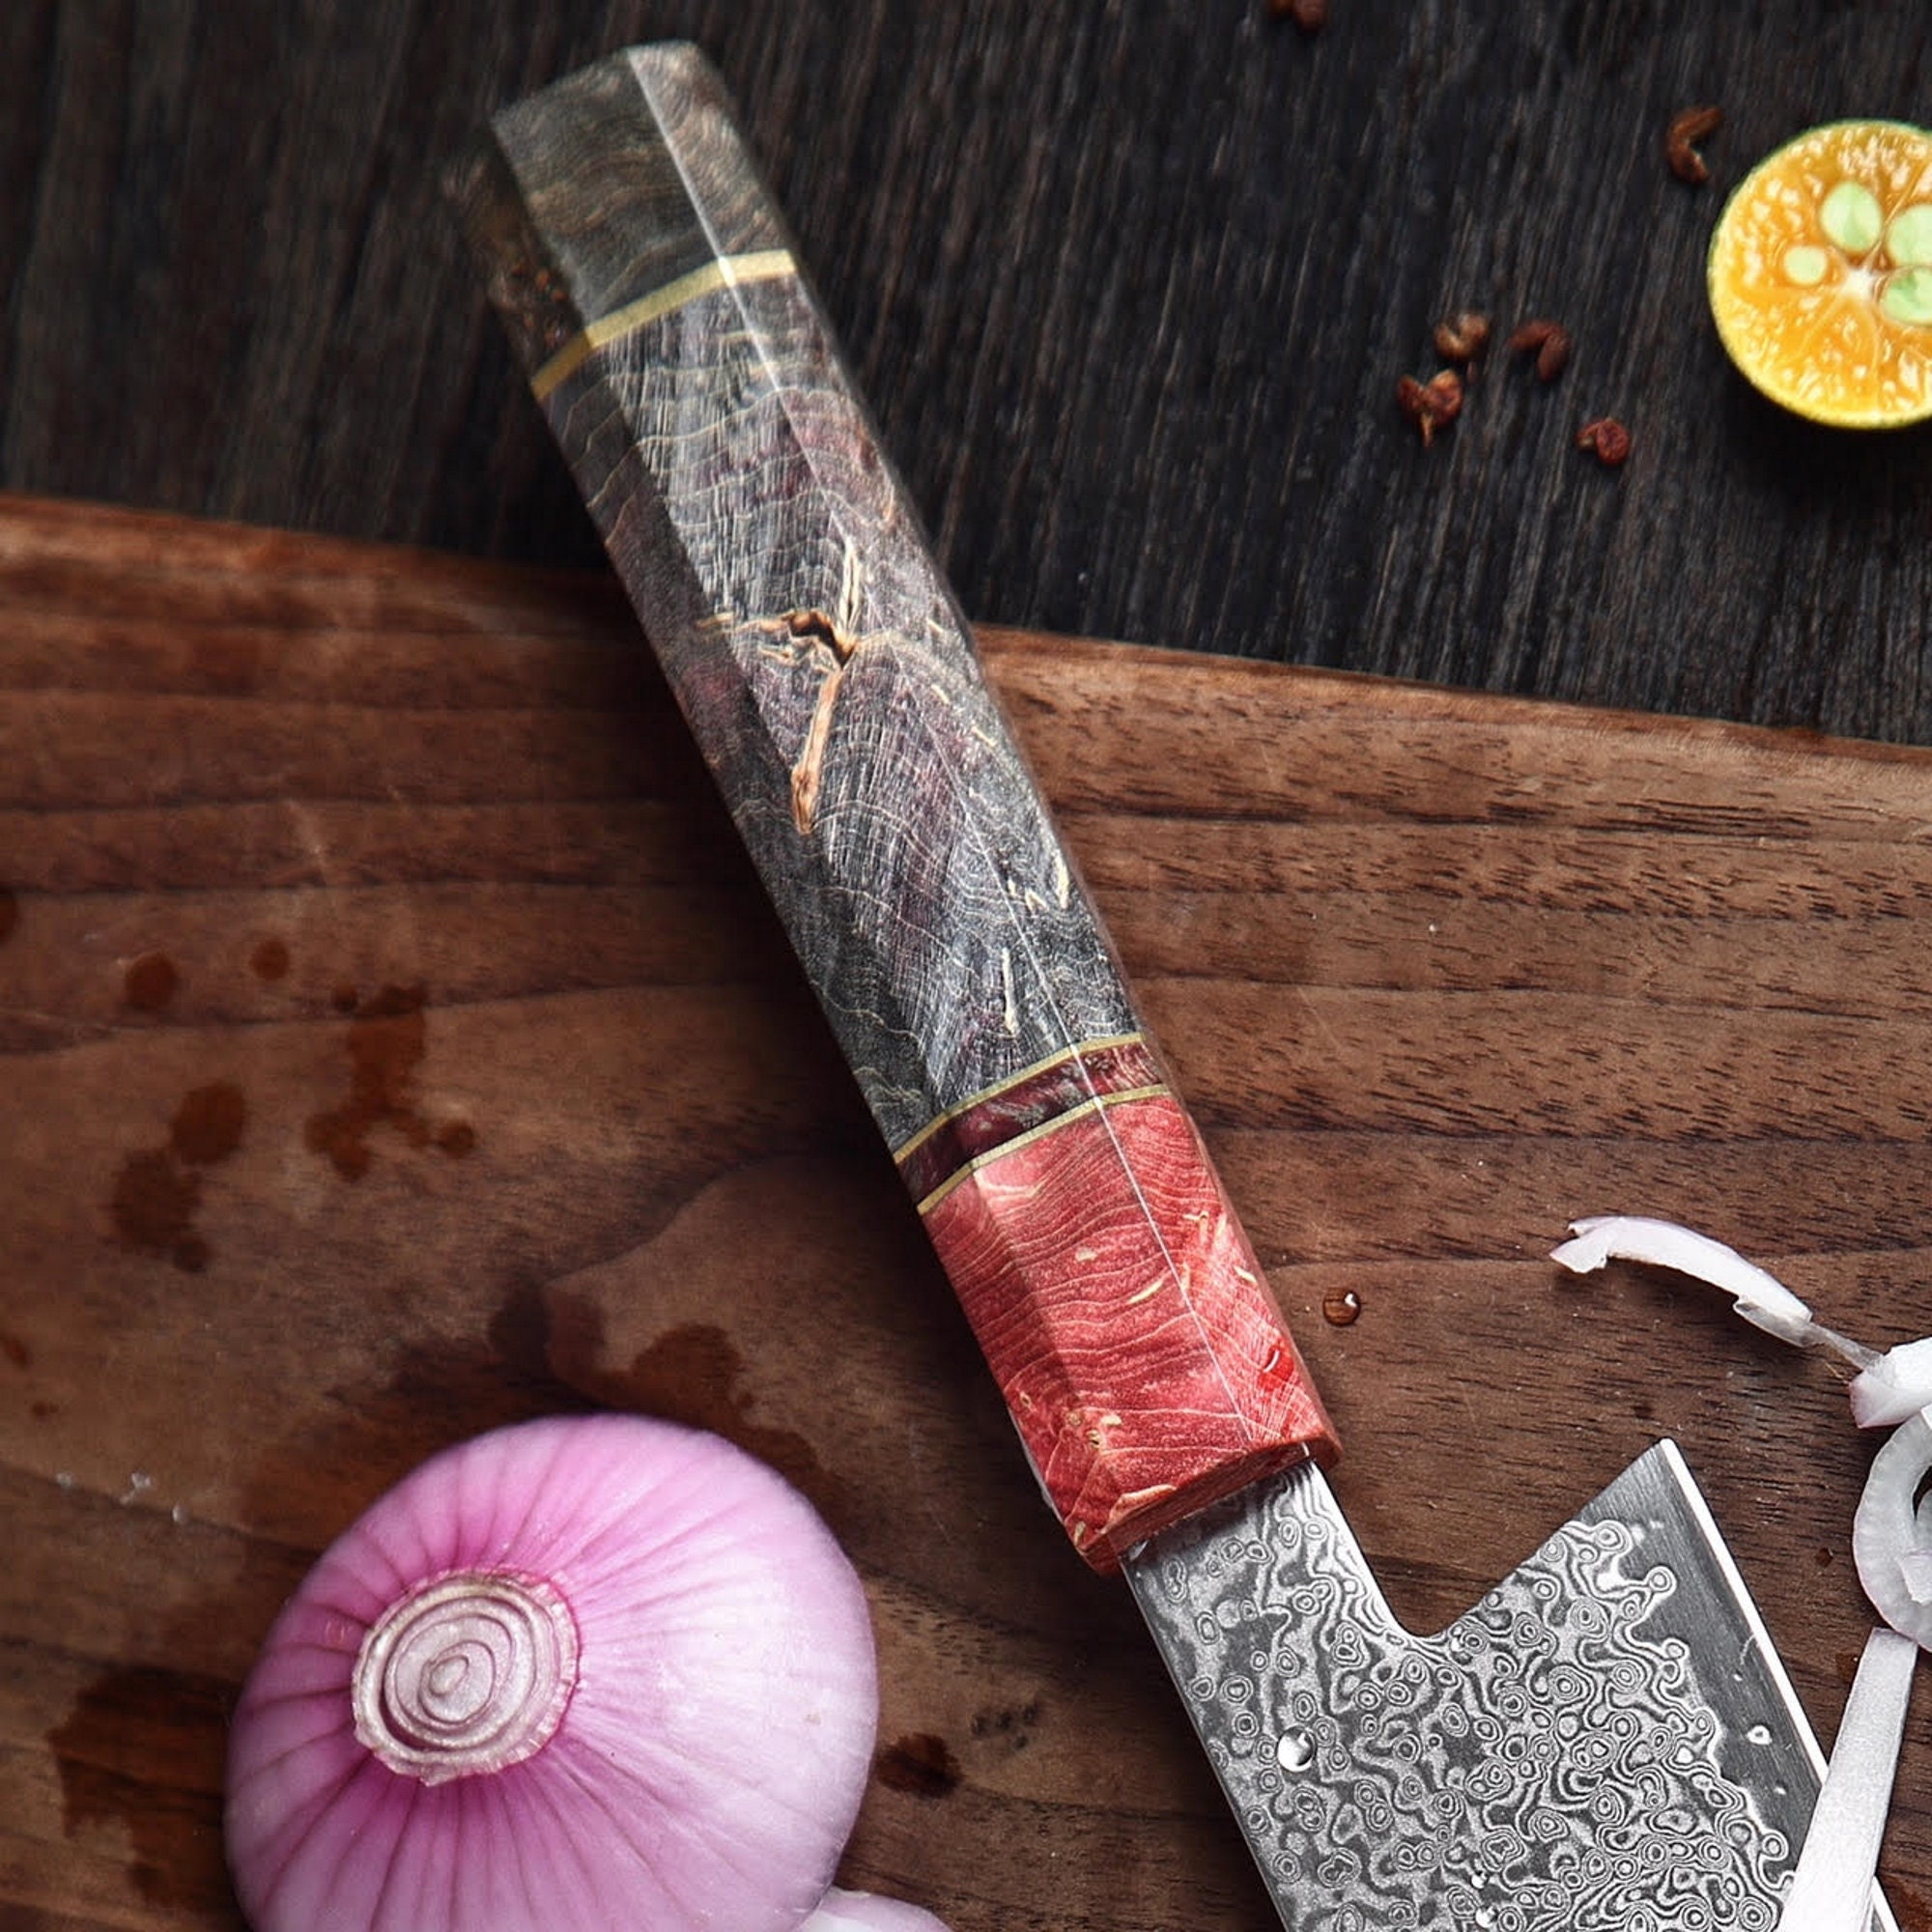 Chef Knife Japanese Kiritsuke Shape Blade 8 Laminated Steel Wood Handle Kitchen  Knives Slicing Cooking 